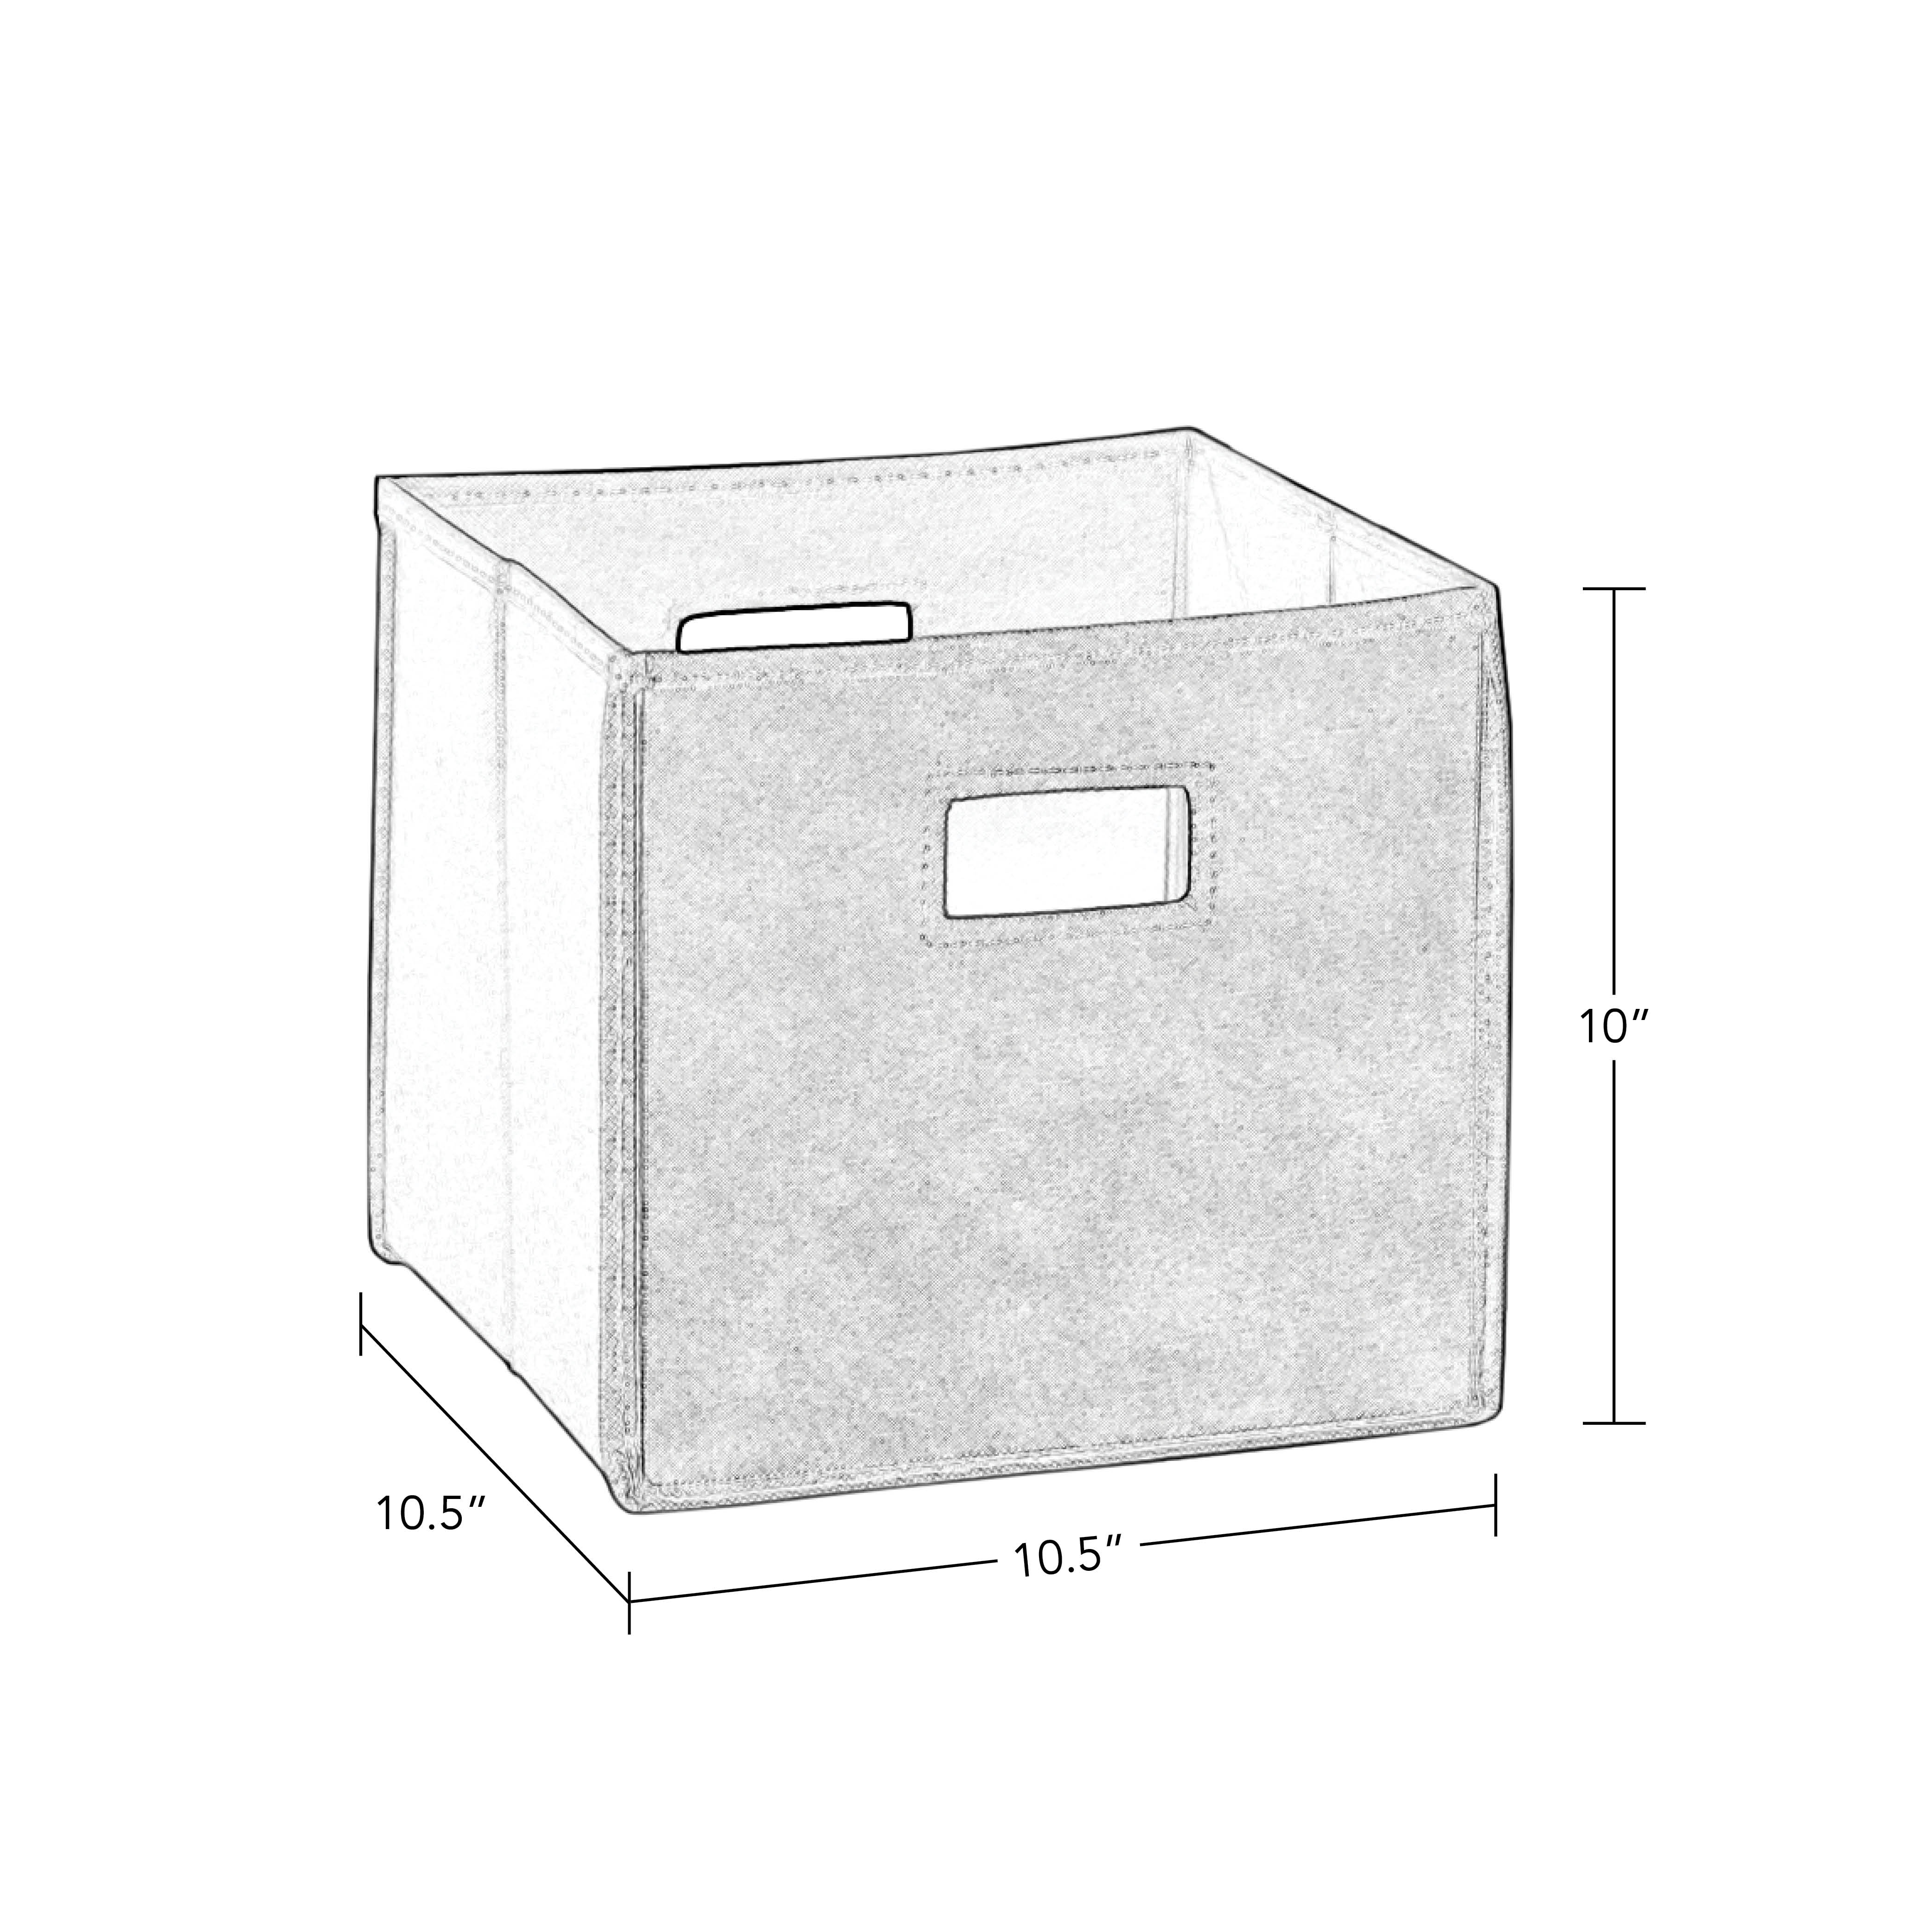 RiverRidge Home Folding Fabric Cube Storage Bin Set of 2 - Pink - image 2 of 7